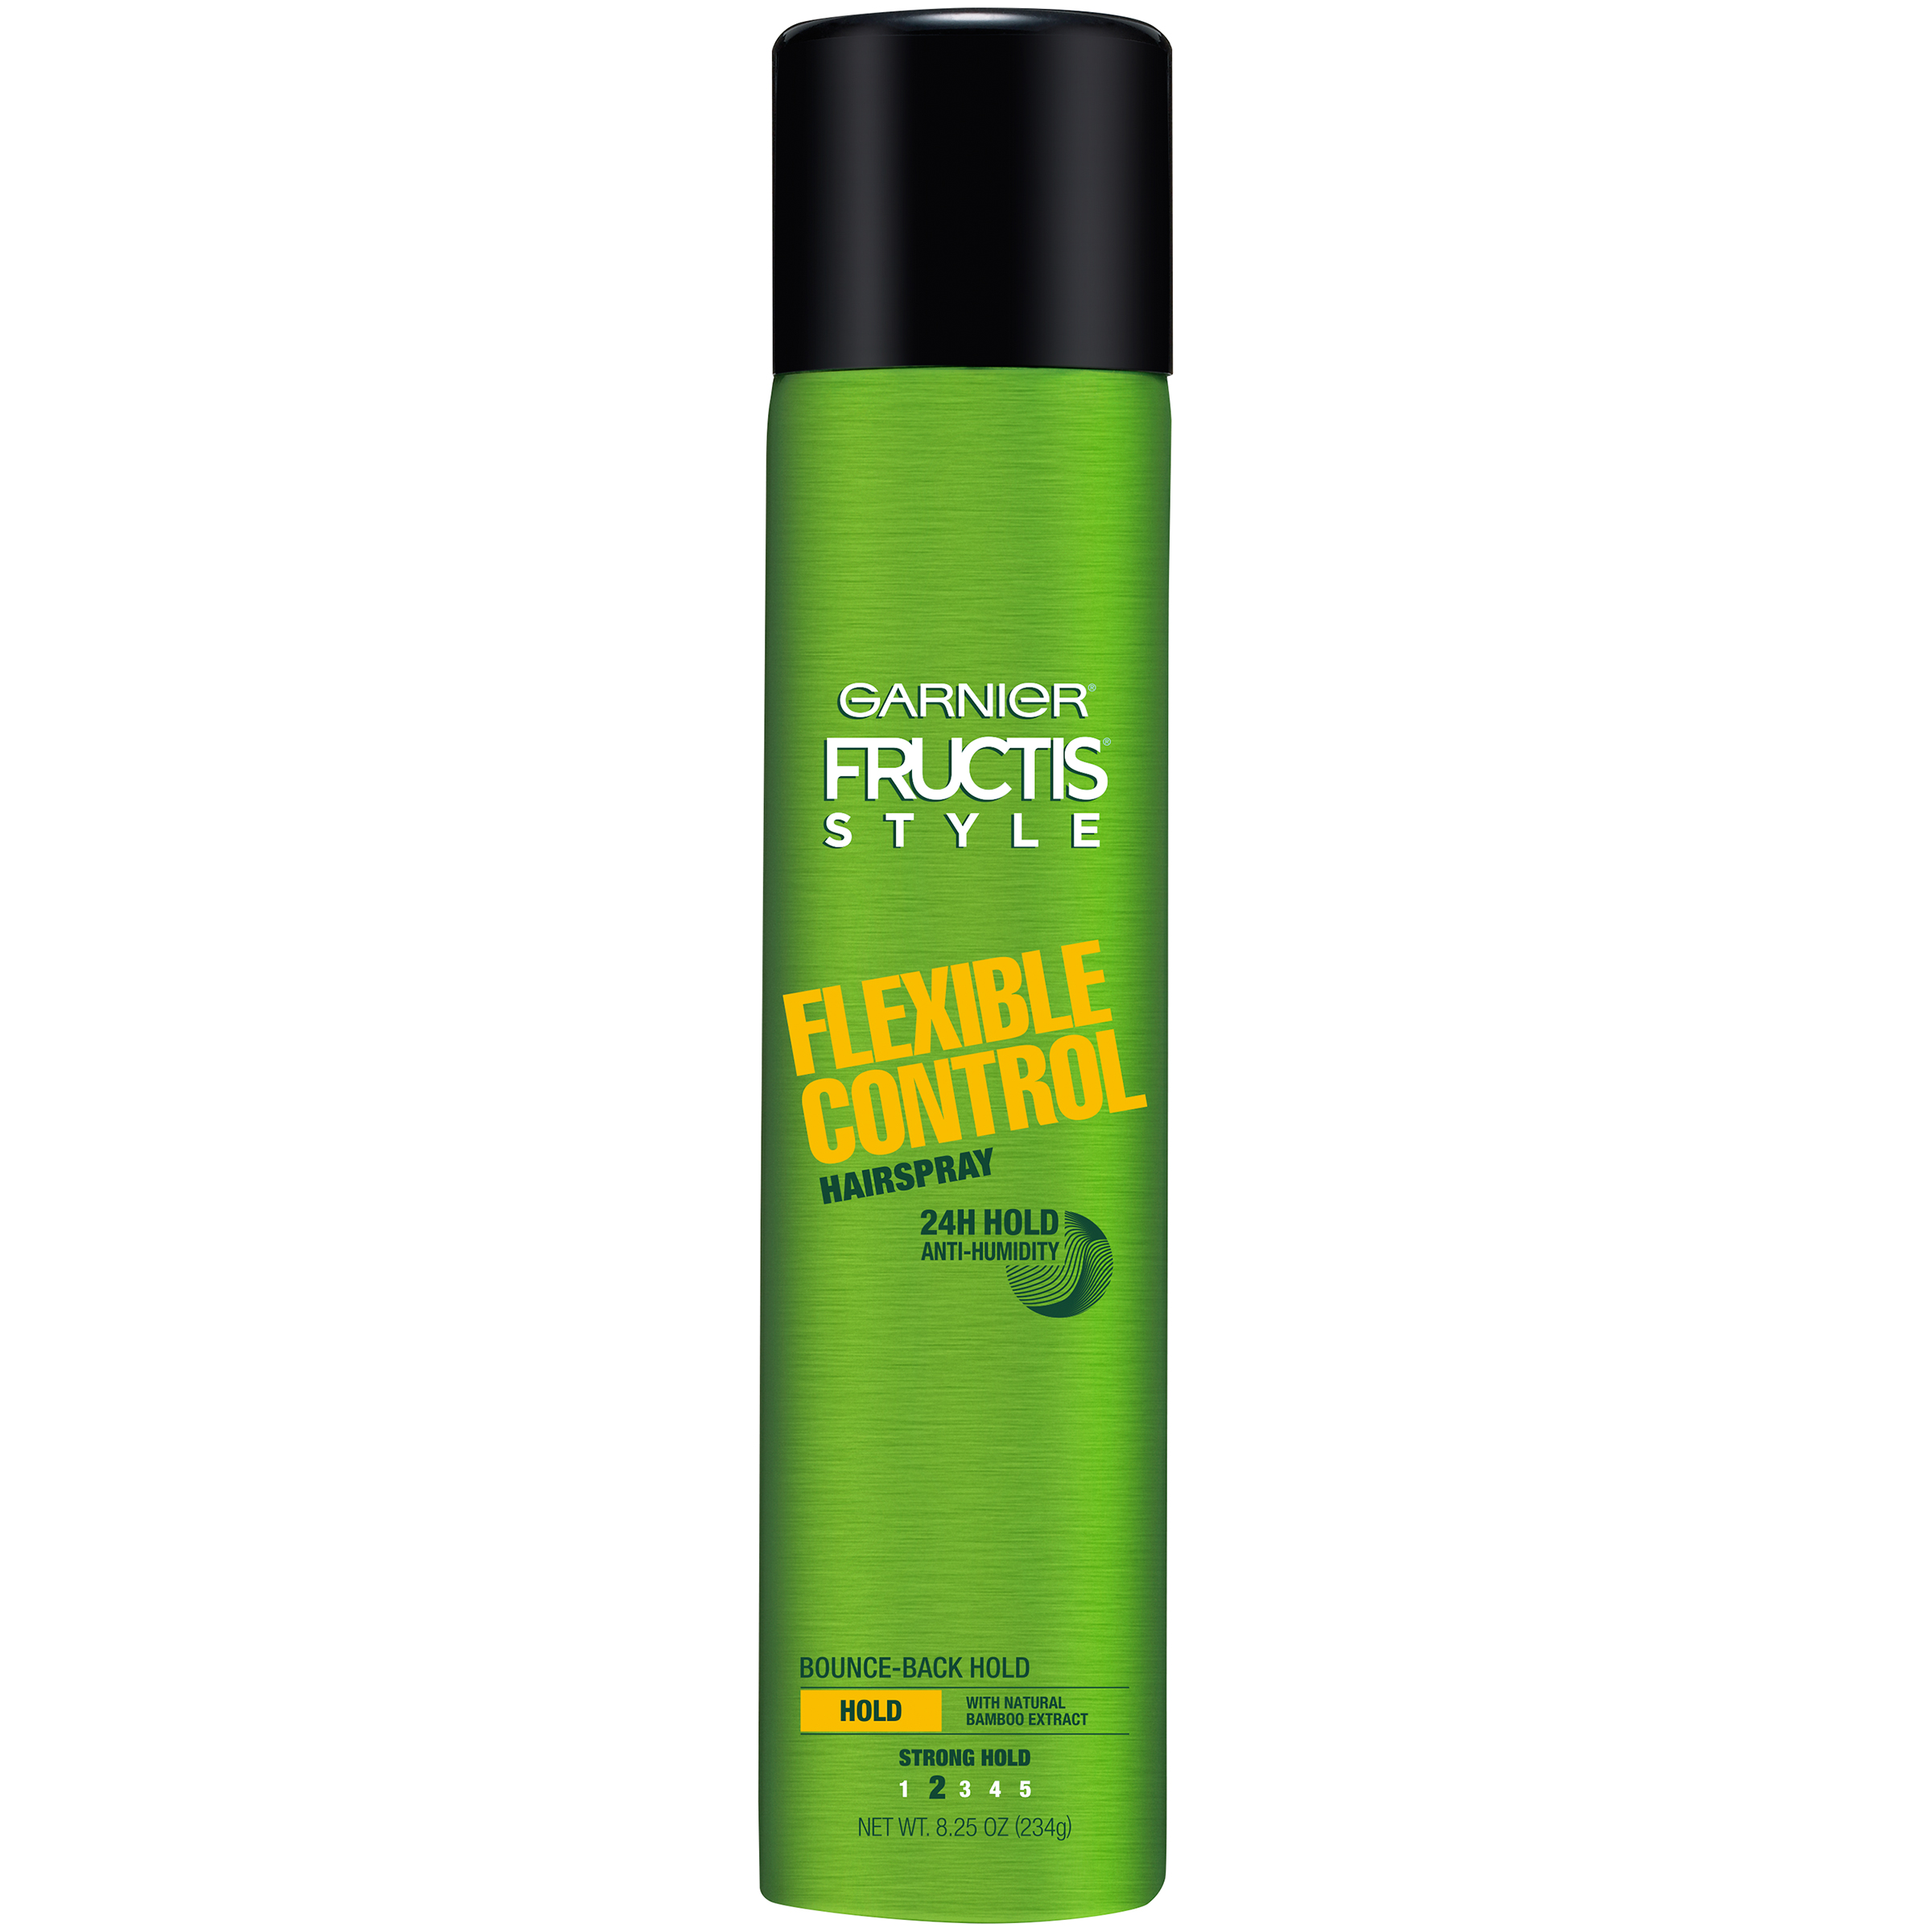 Garnier Fructis Style Hairspray, Anti-Humidity, Flexible Control, Strong 2, 8.25 oz (234 g)